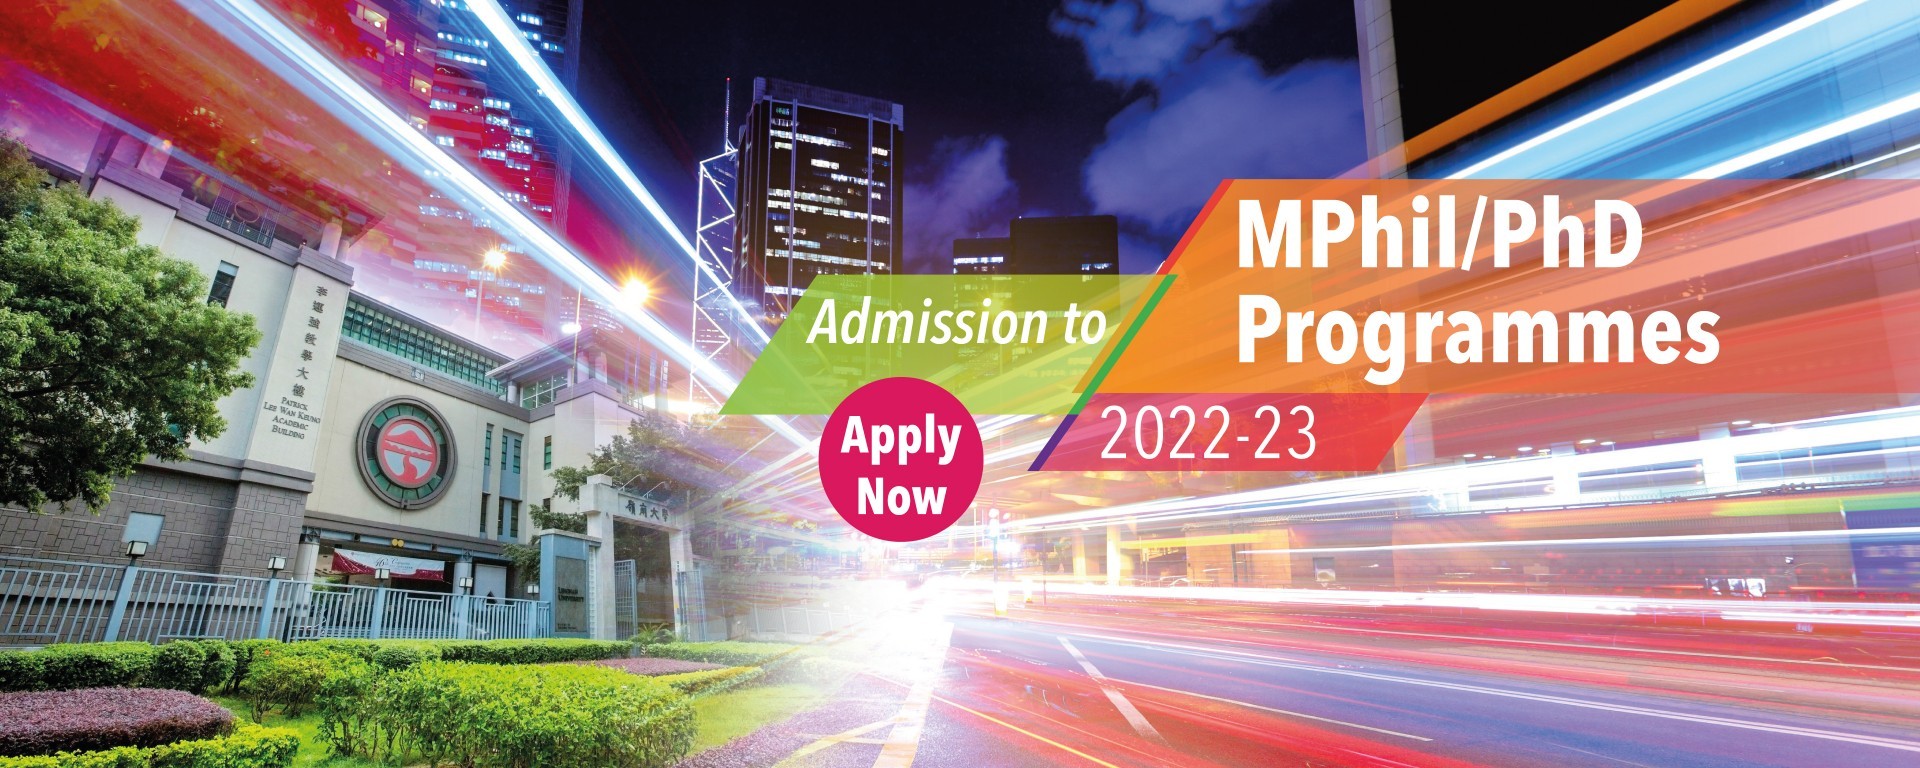 Admission to MPhil/PhD